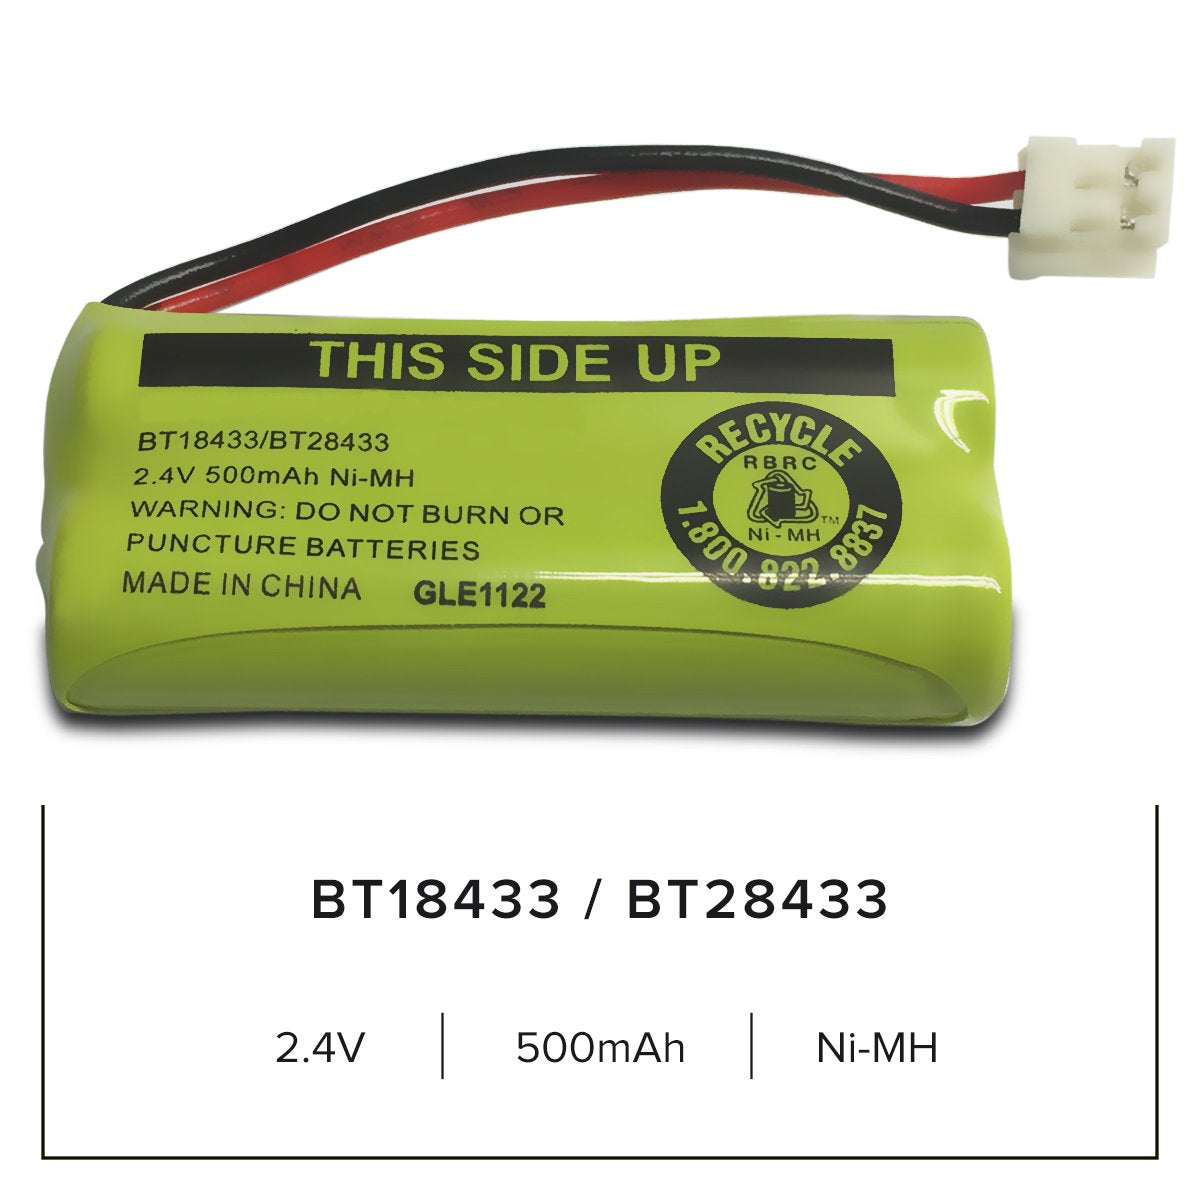 Uniden 6051 Cordless Phone Battery